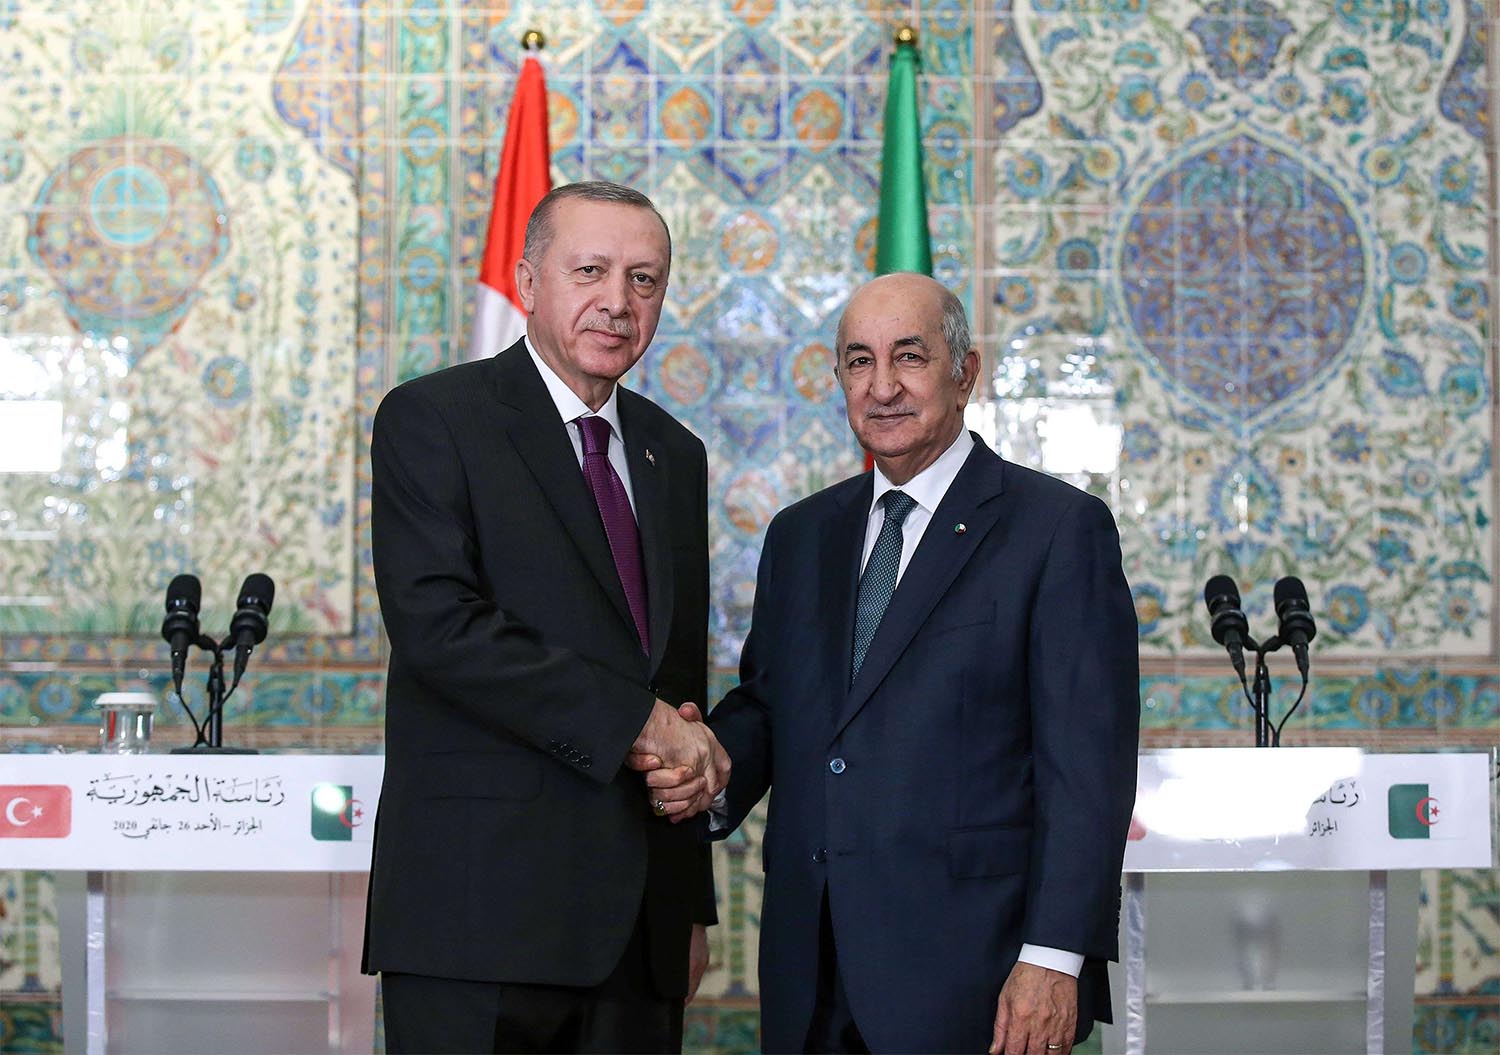 Erdogan (L) shaking hands with Tebboune